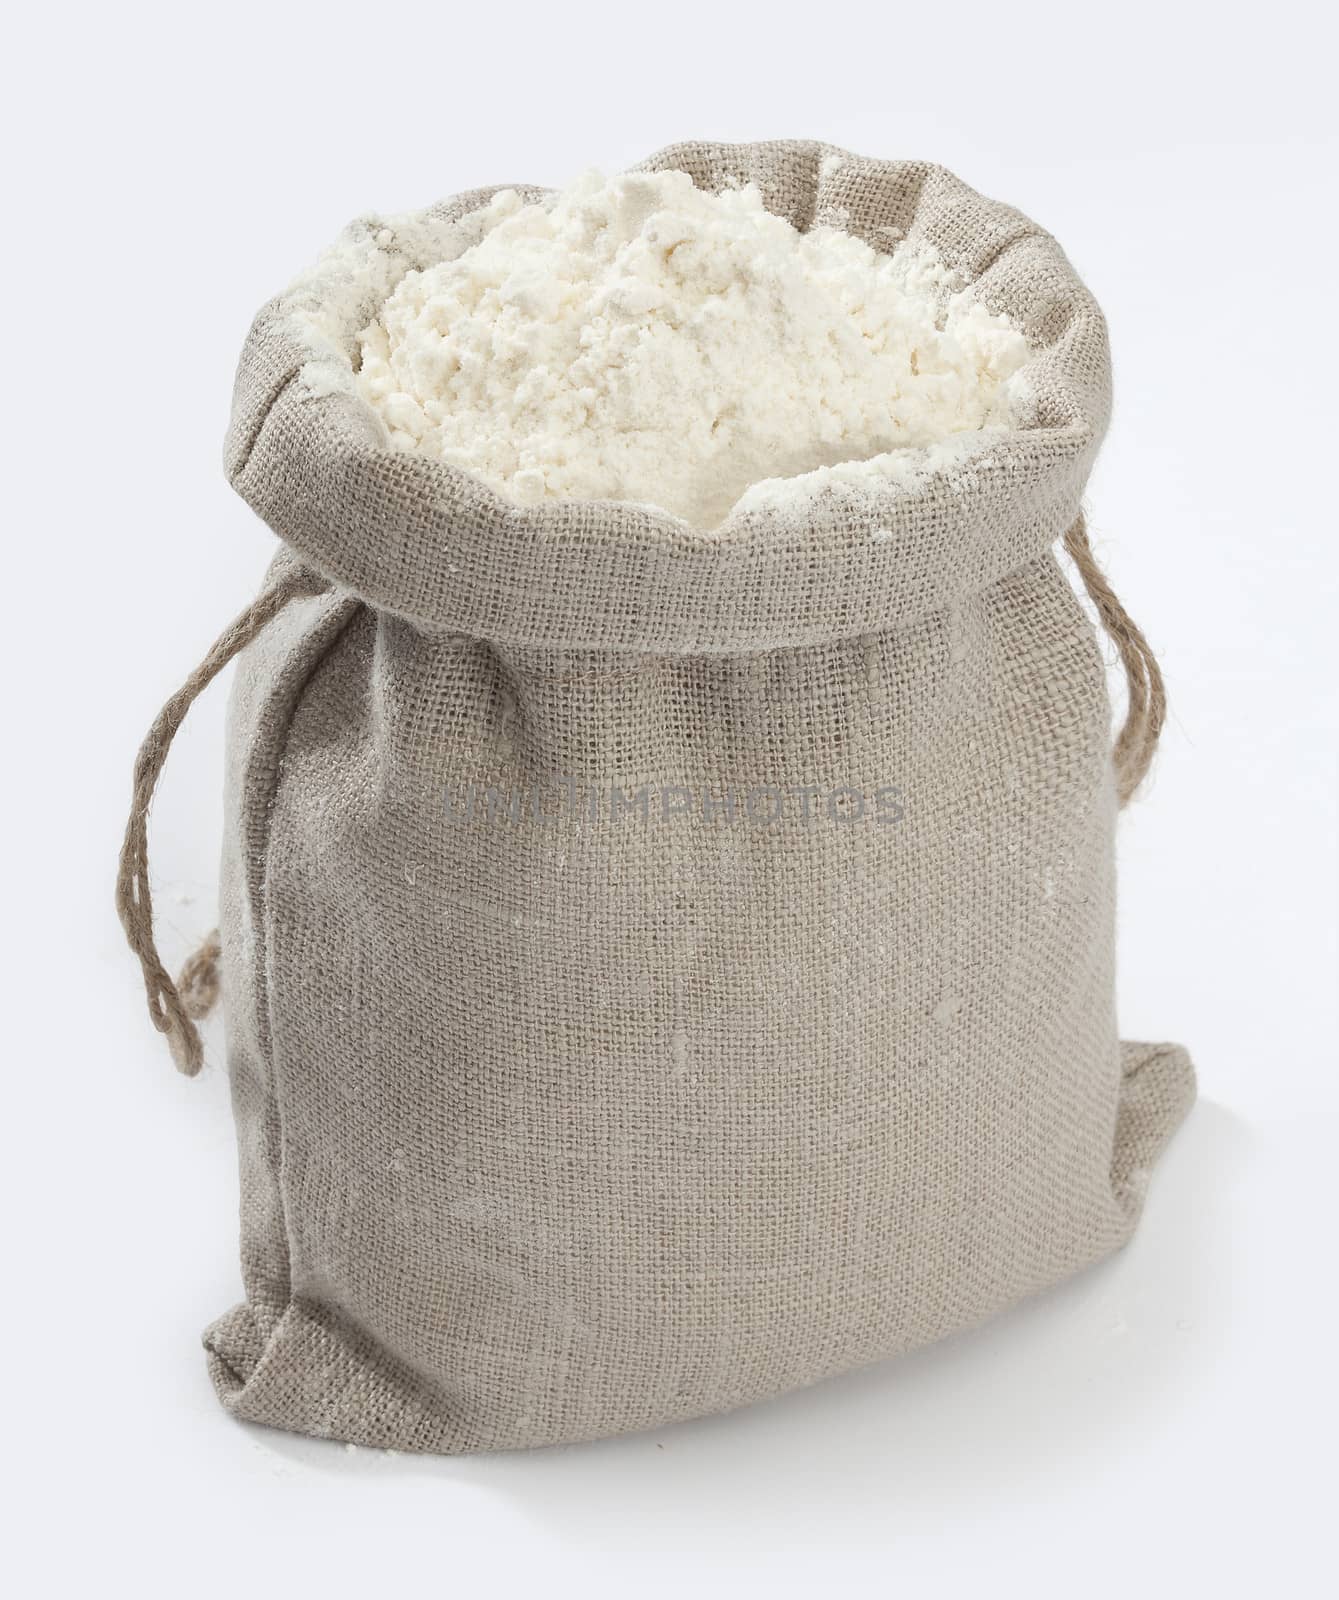 Sacking with flour by Angorius